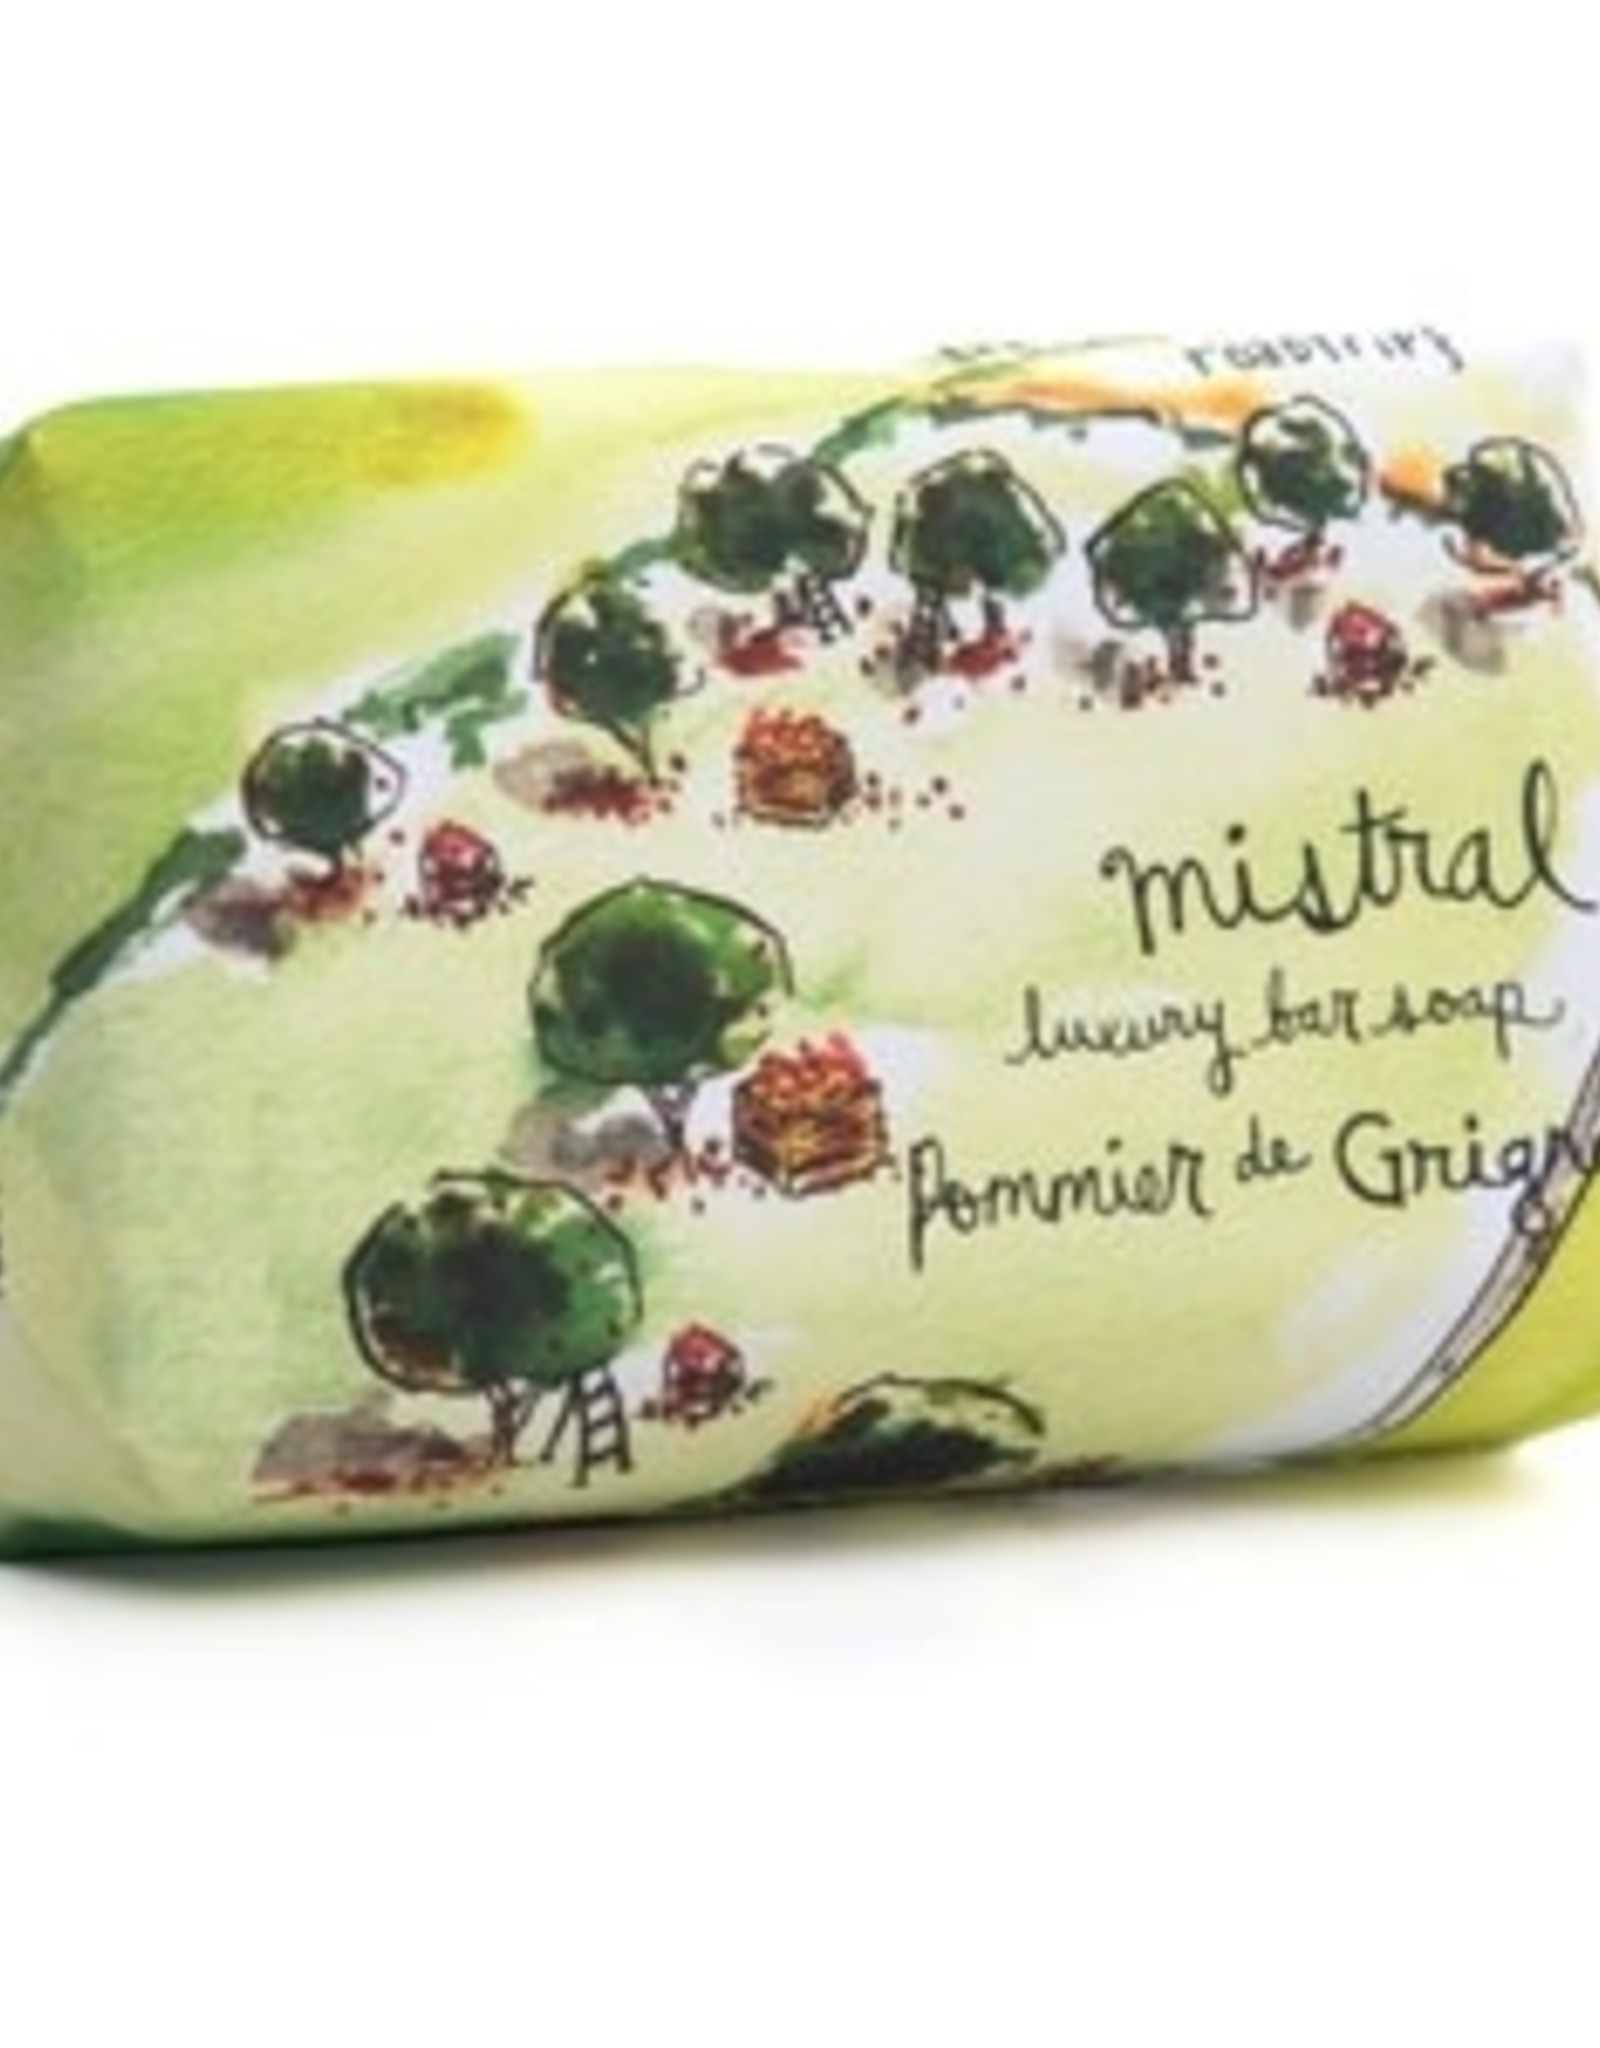 Mistral Grignan Apple Soap - Provence Road Trip Soap